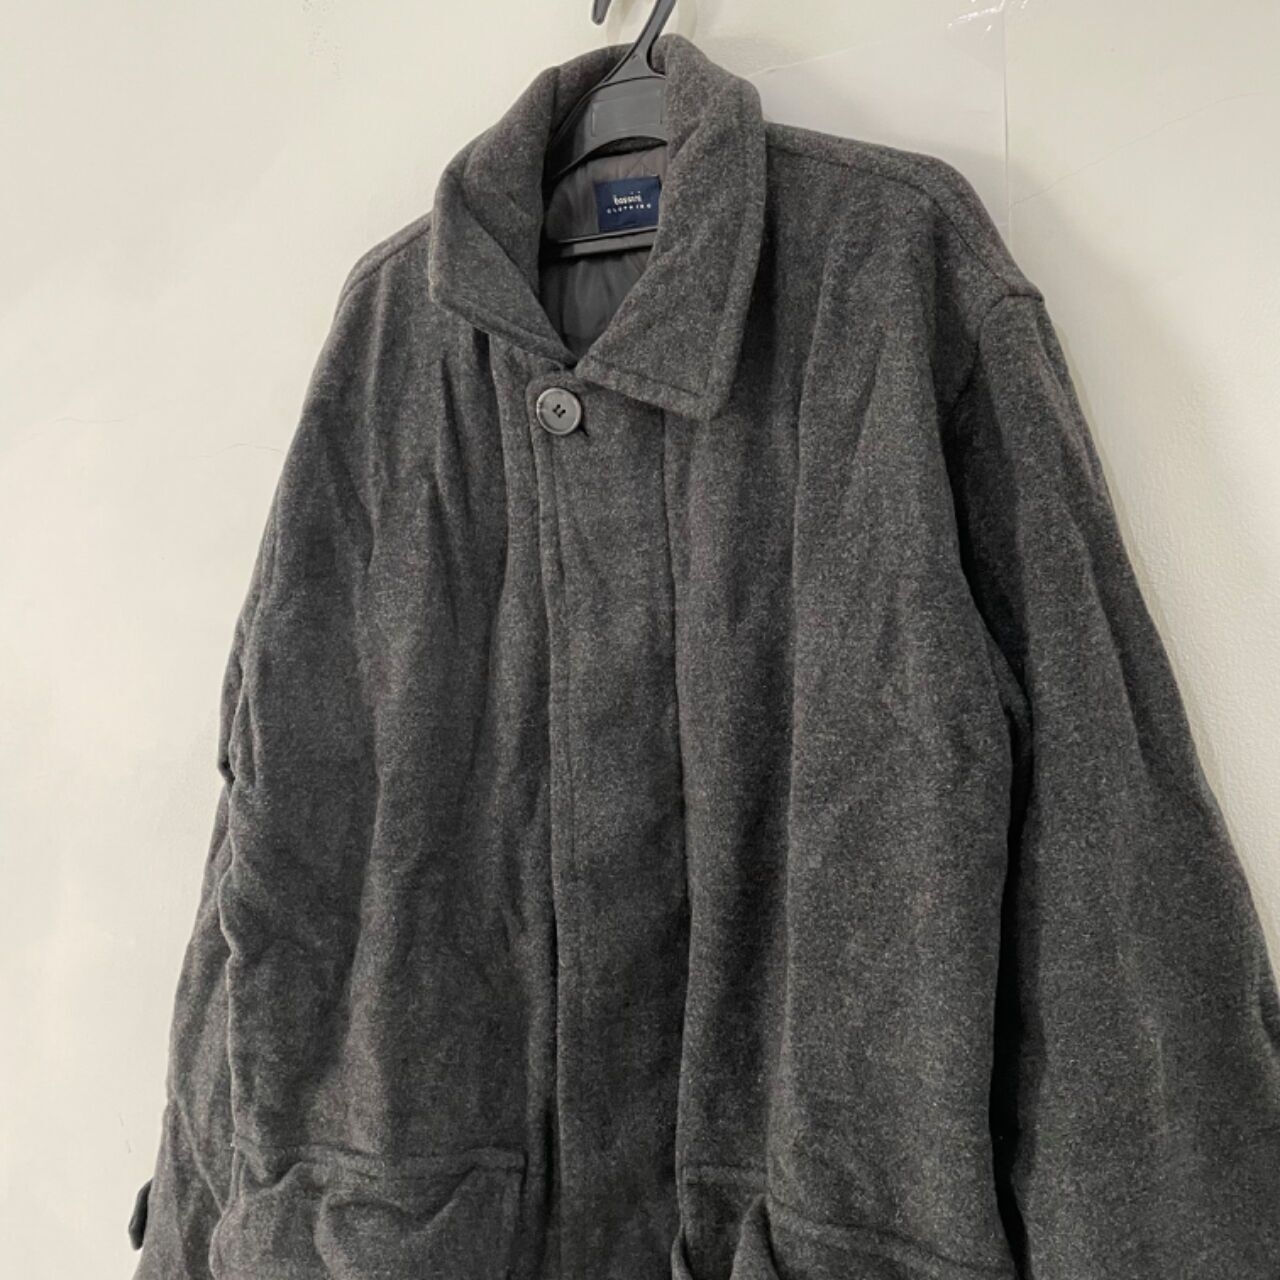 Bossini Dark Grey Coat